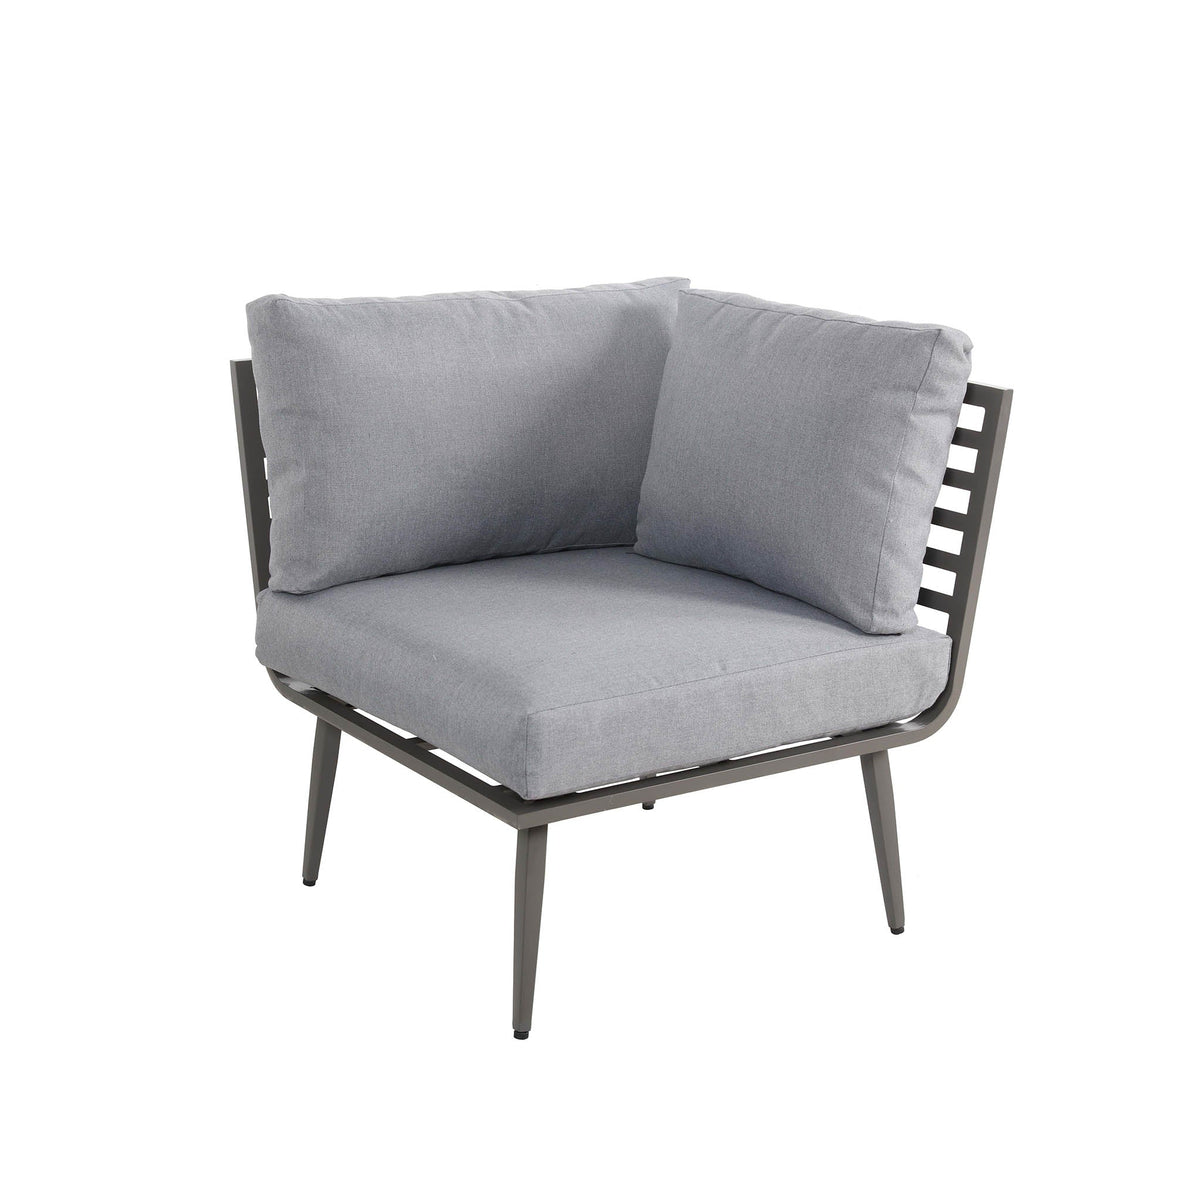 Mayfair 150cm Grey Outdoor Corner Fire Pit Table Lounge Set Corner Sofa Seat